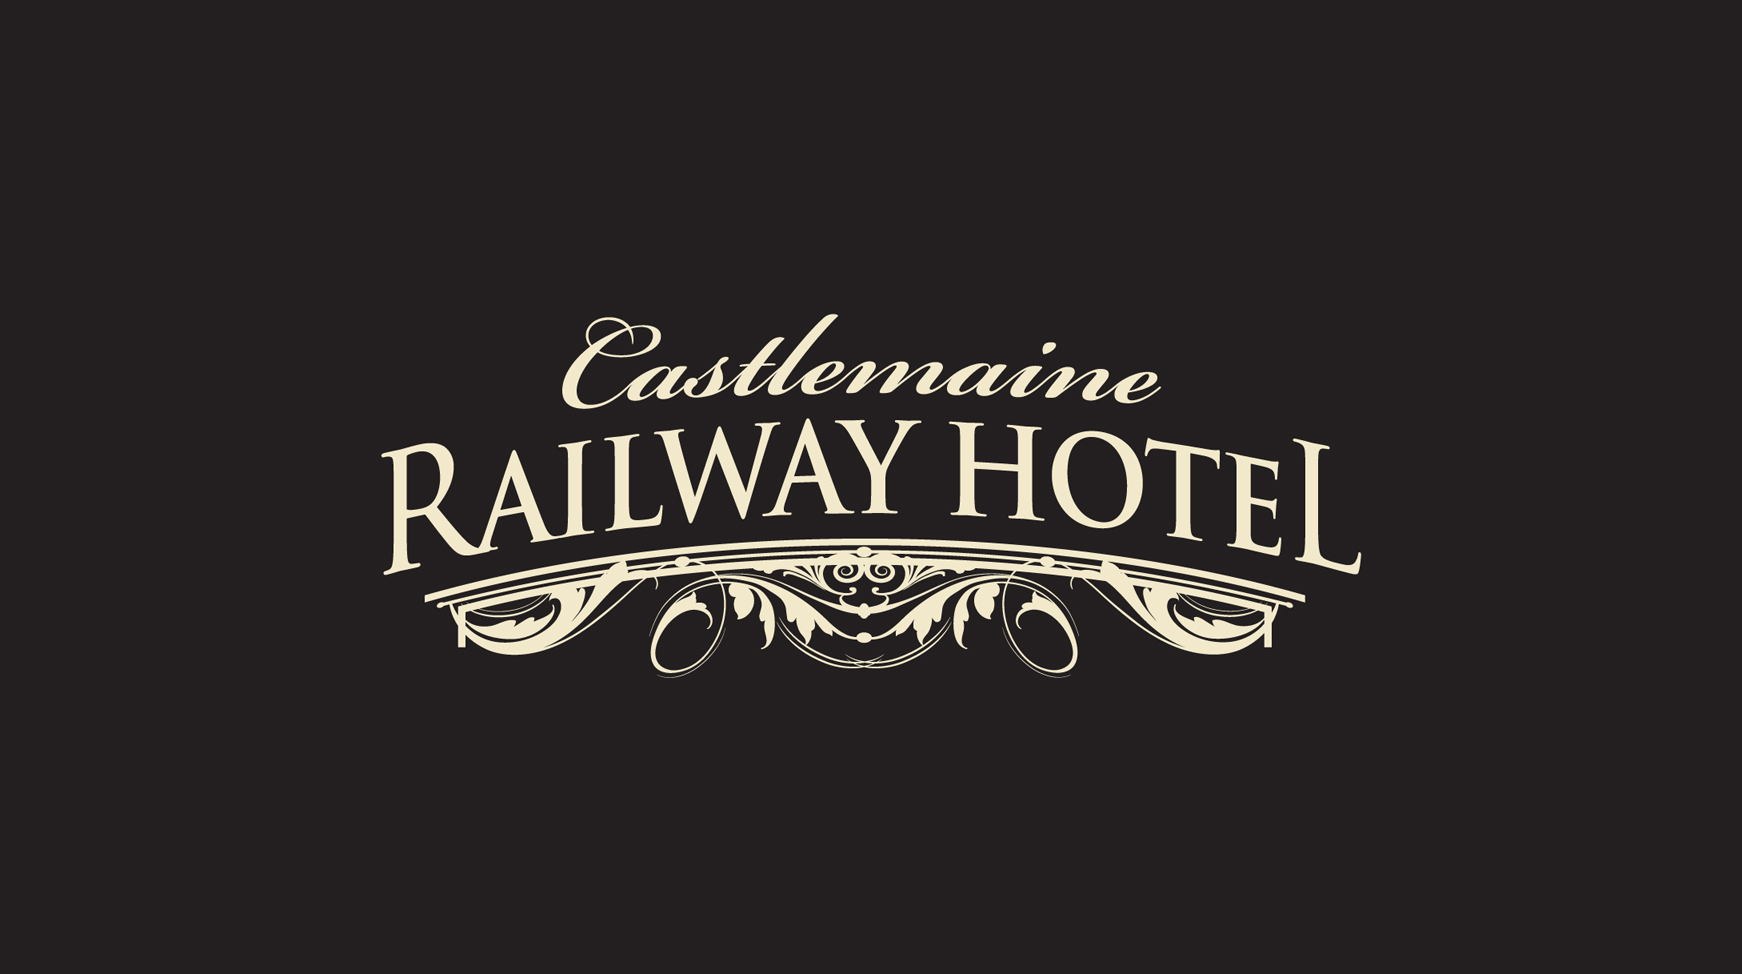 Railway Hotel Castlemaine - Coogee Beach Accommodation